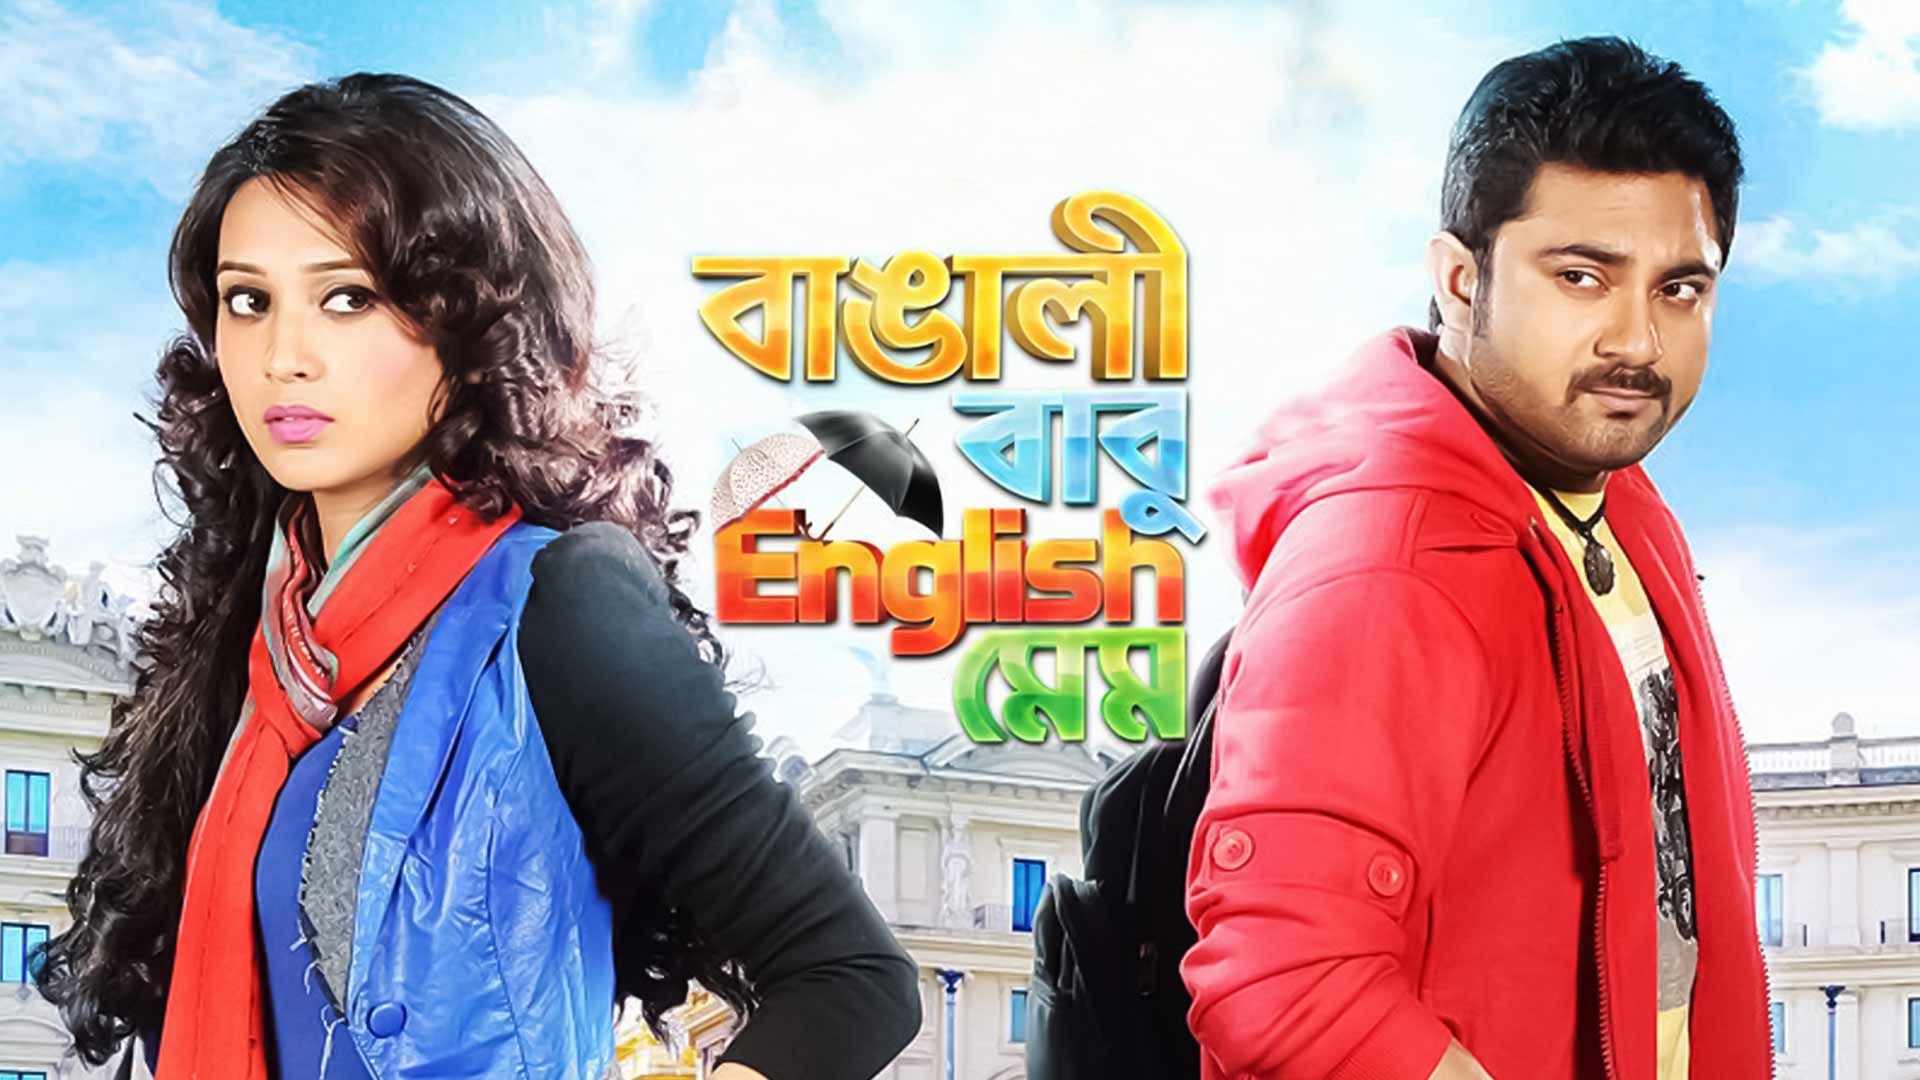 Watch Bangali Babu English Mam Full Movie Online In HD Streaming